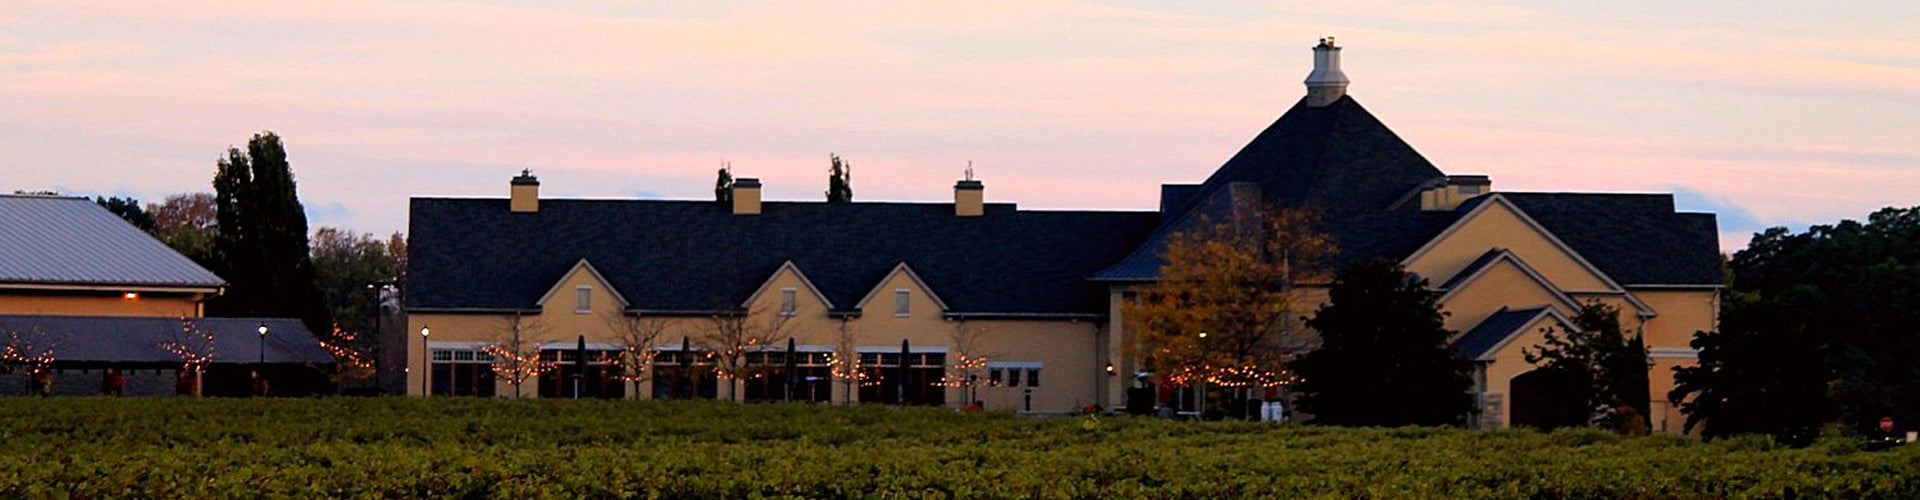 Peller Family Estates Winery Ontario